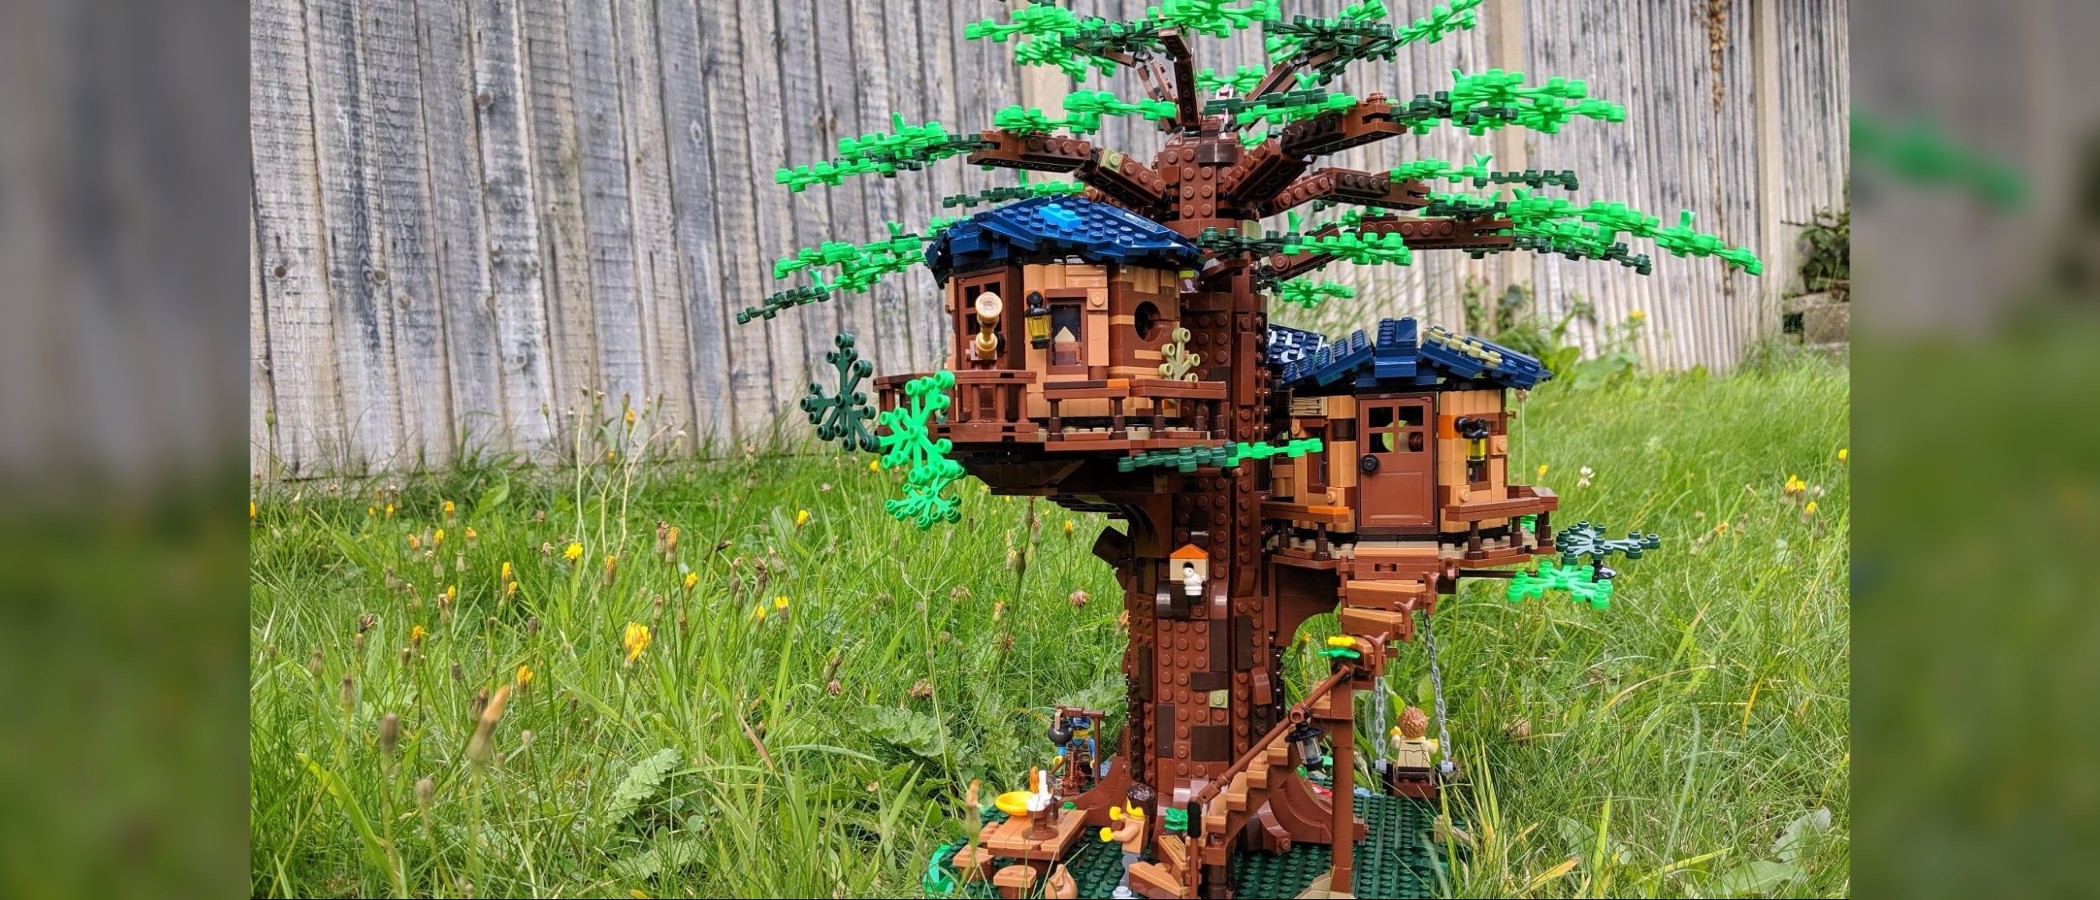 Modifying the bonsai tree  Lego tree, Cool lego creations, Lego creations